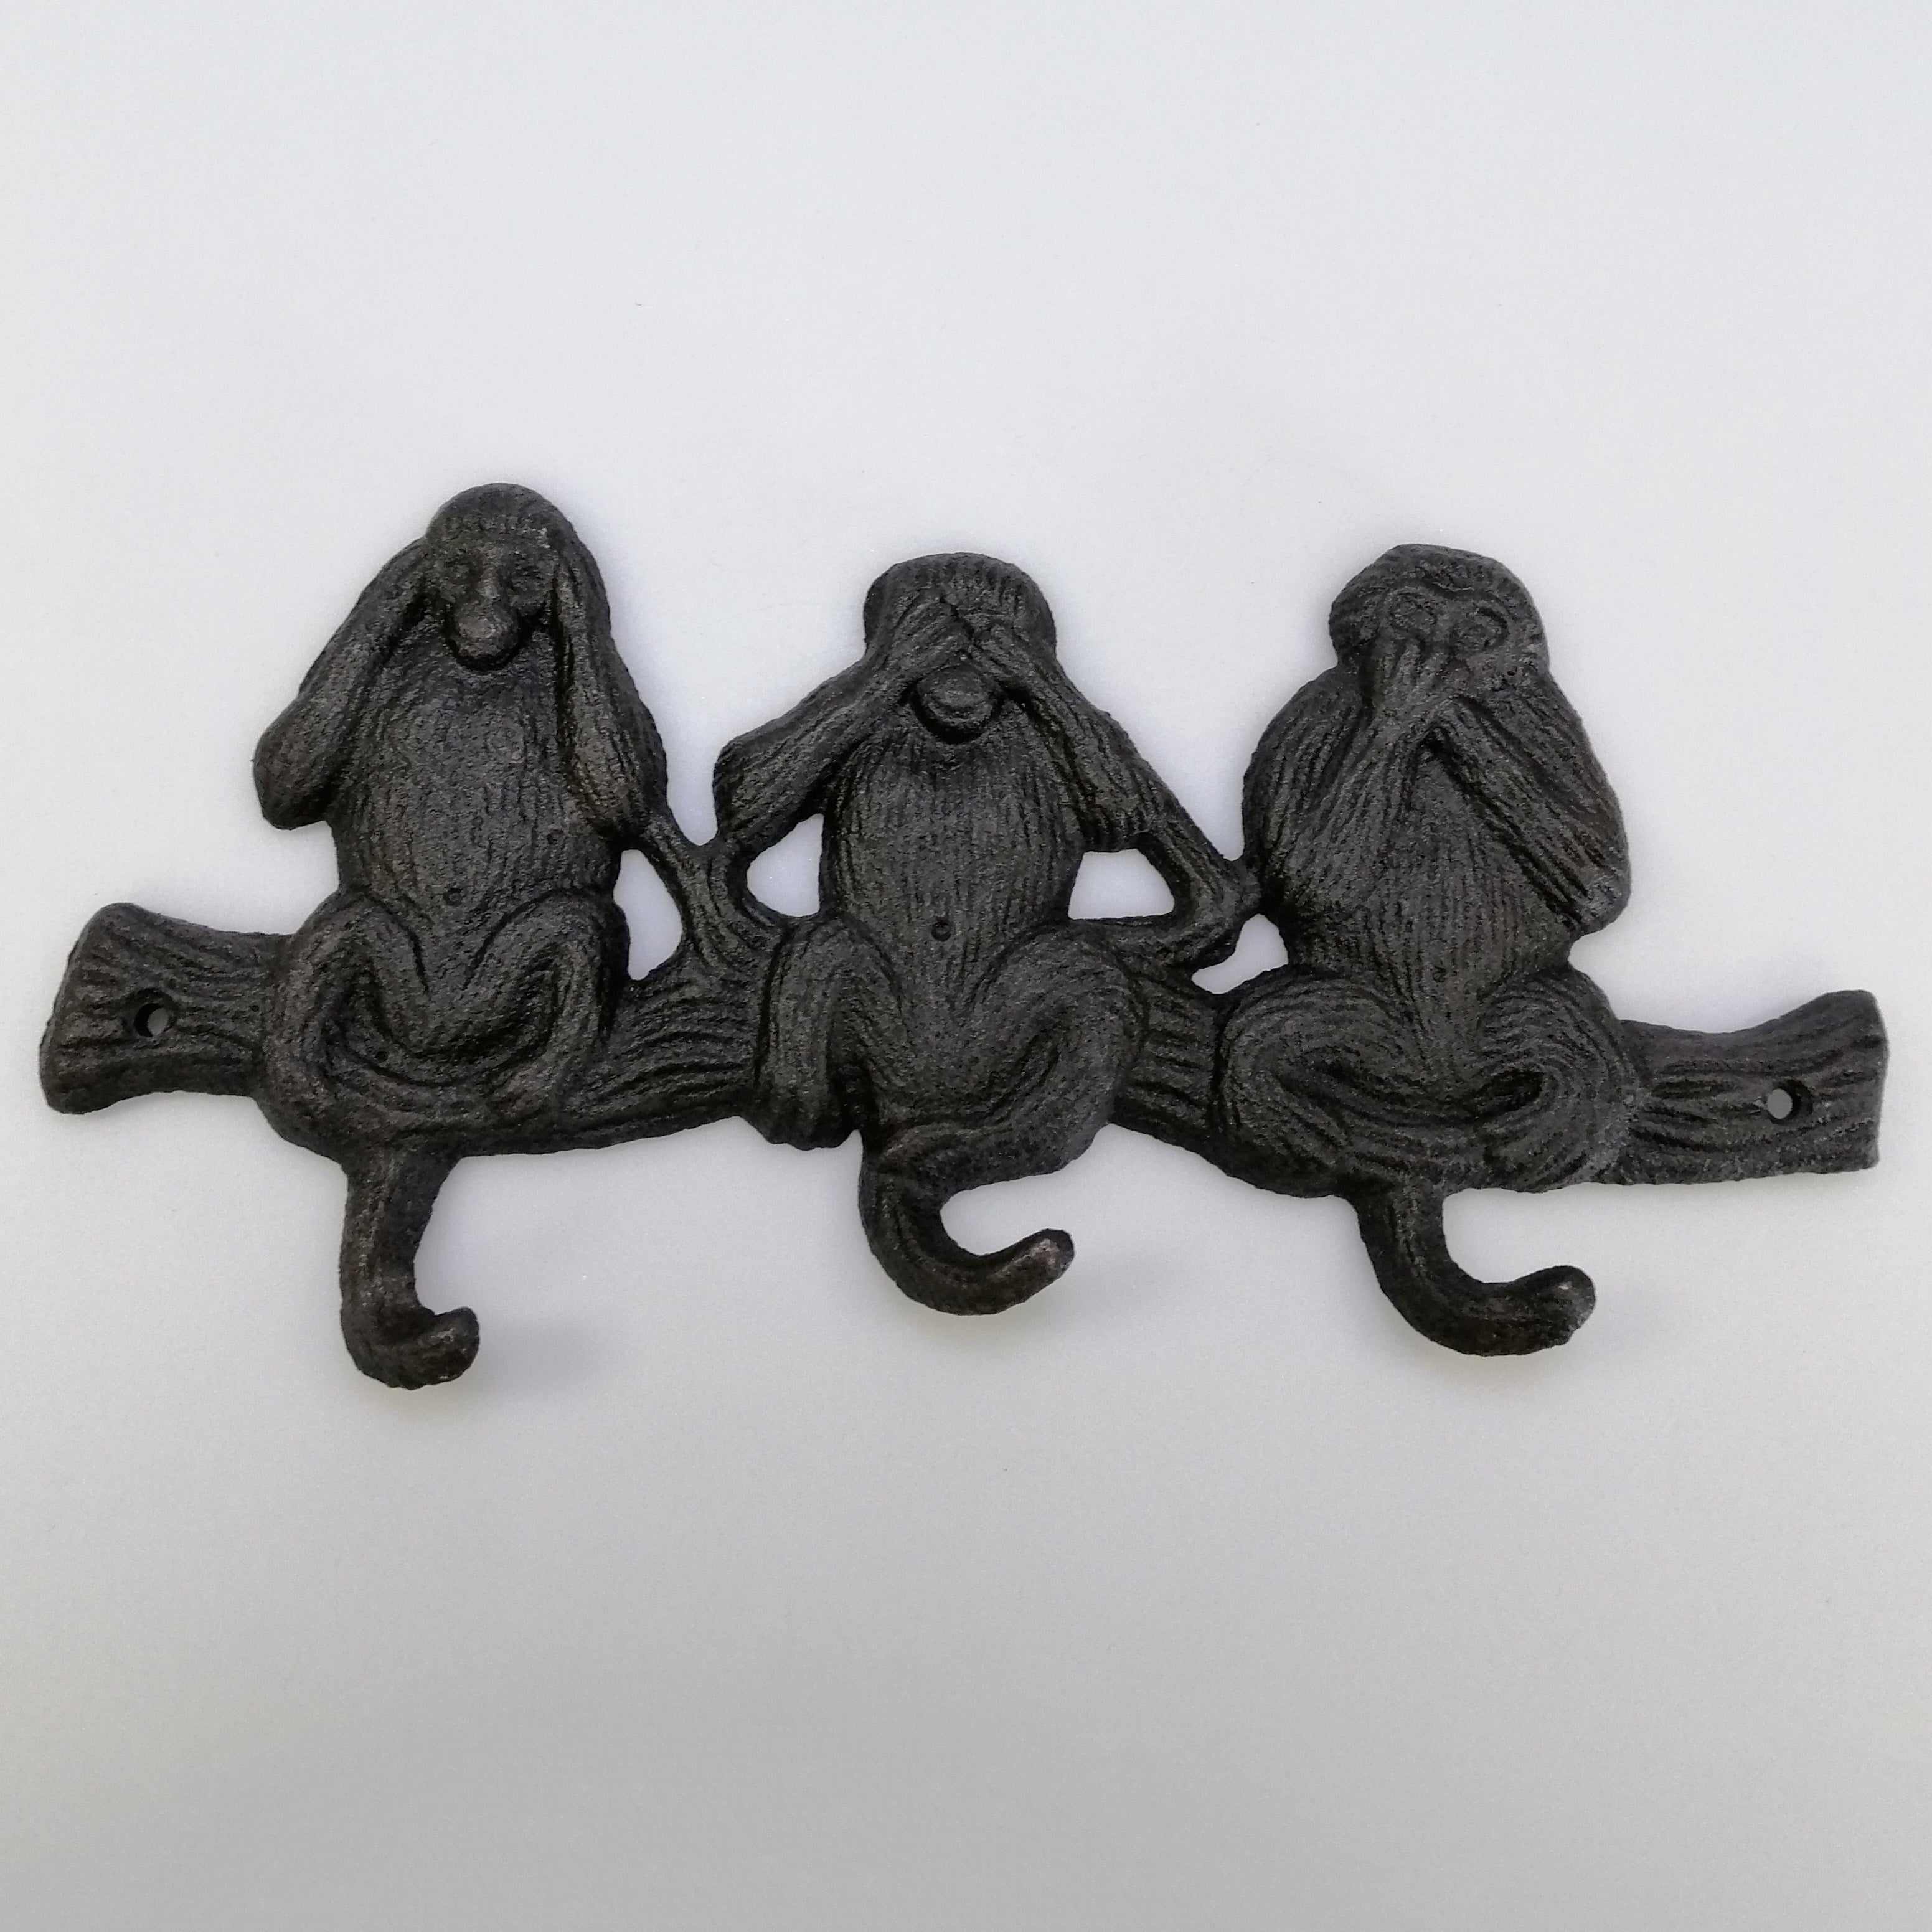 Cast Iron Key holder - Monkeys